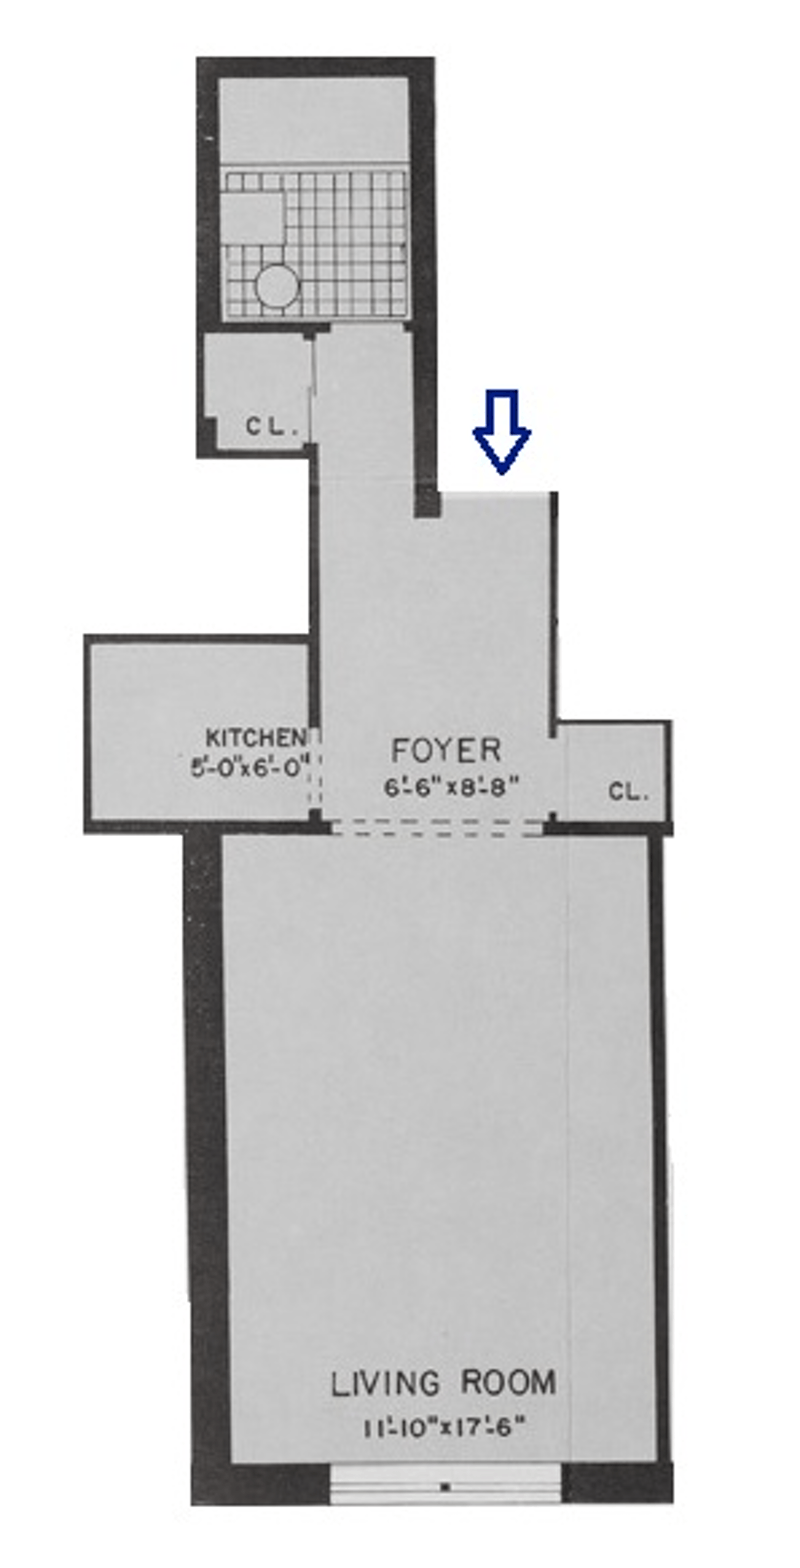 Floorplan for 534 East 88th Street, 4D